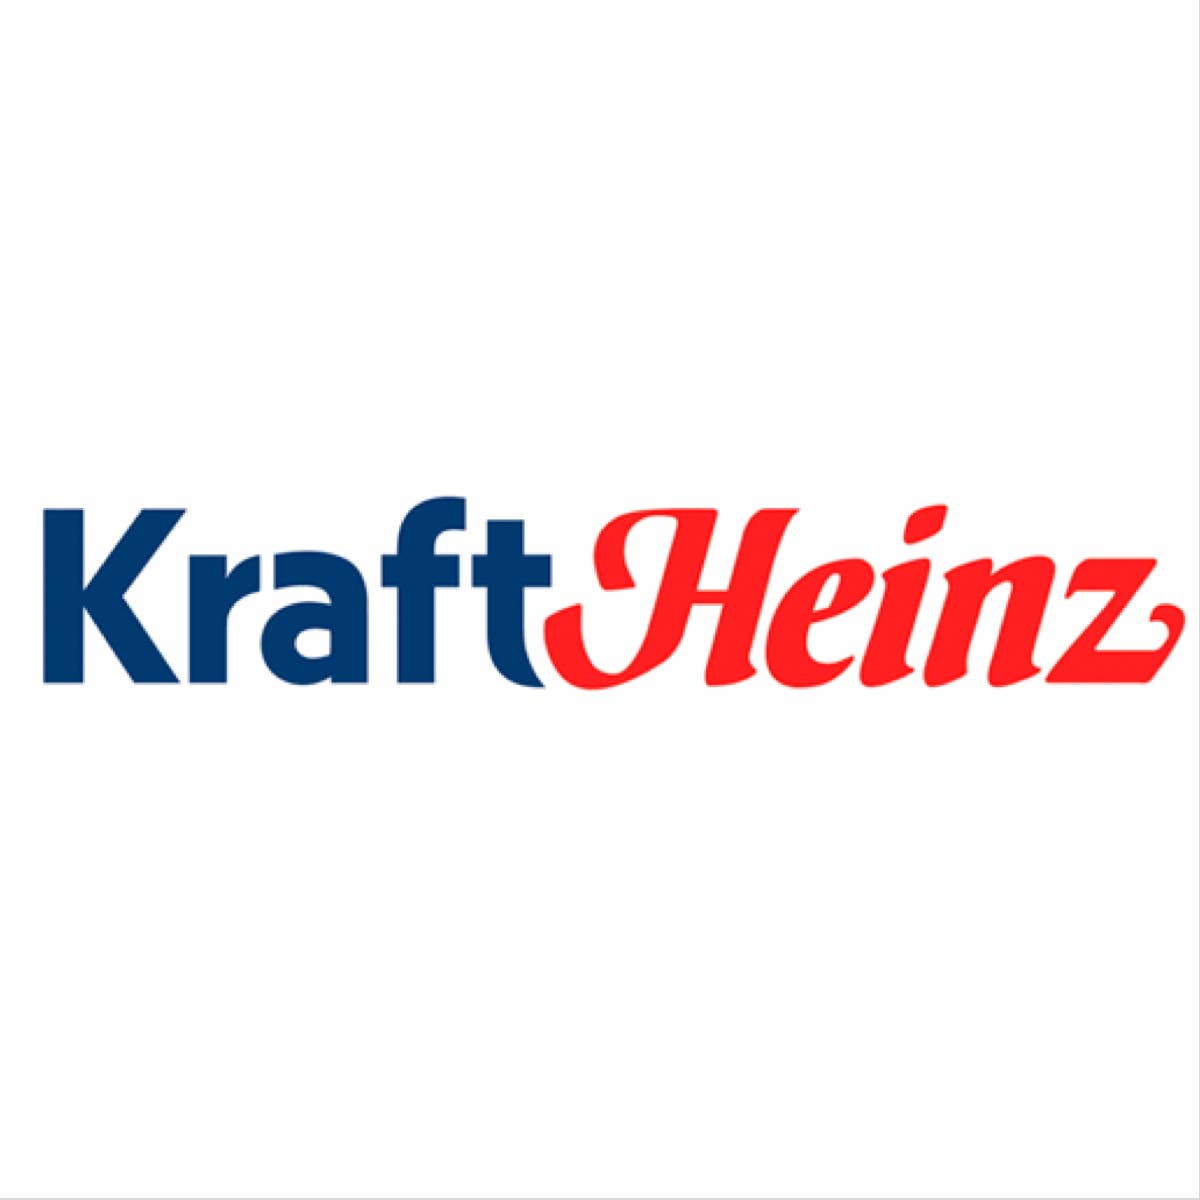 Kraft Heinz names Carat a Global Media Agency Partner